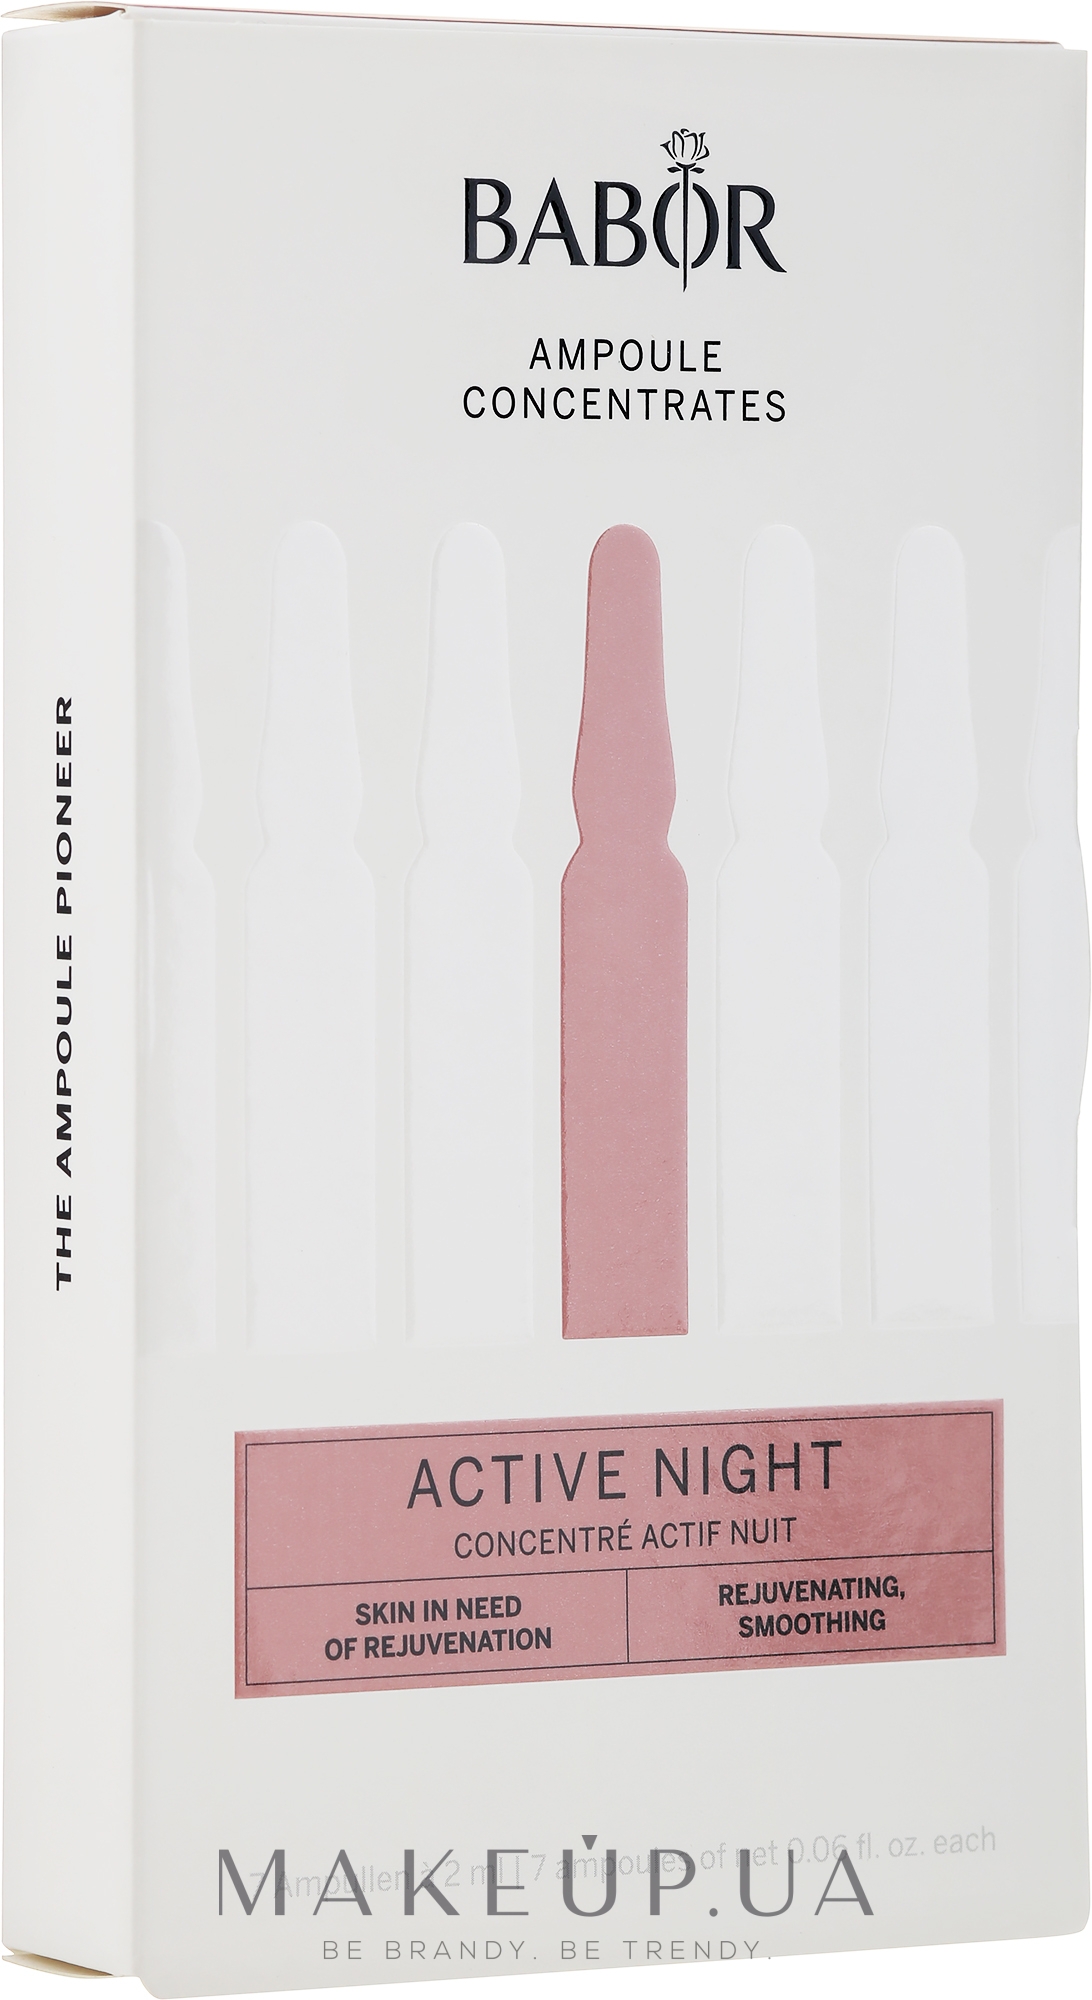 Ампулы ночные для лица - Babor Ampoule Concentrates Active Night — фото 7x2ml